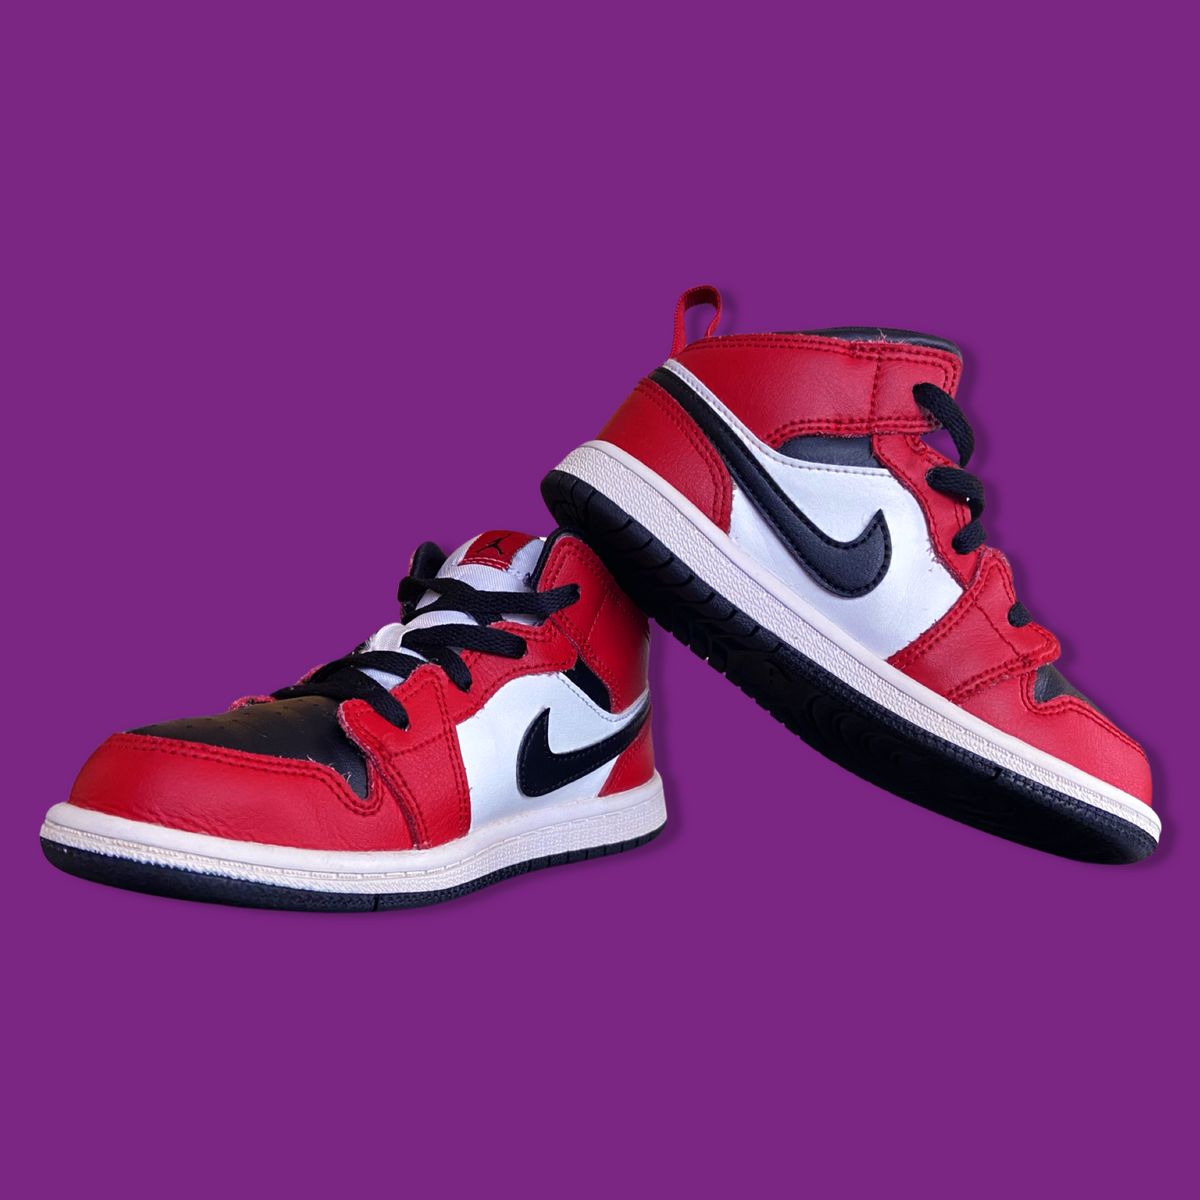 Nike Air Jordan 1 Mid Glow In The Dark Limited Edition Sneakers 10C Toddler